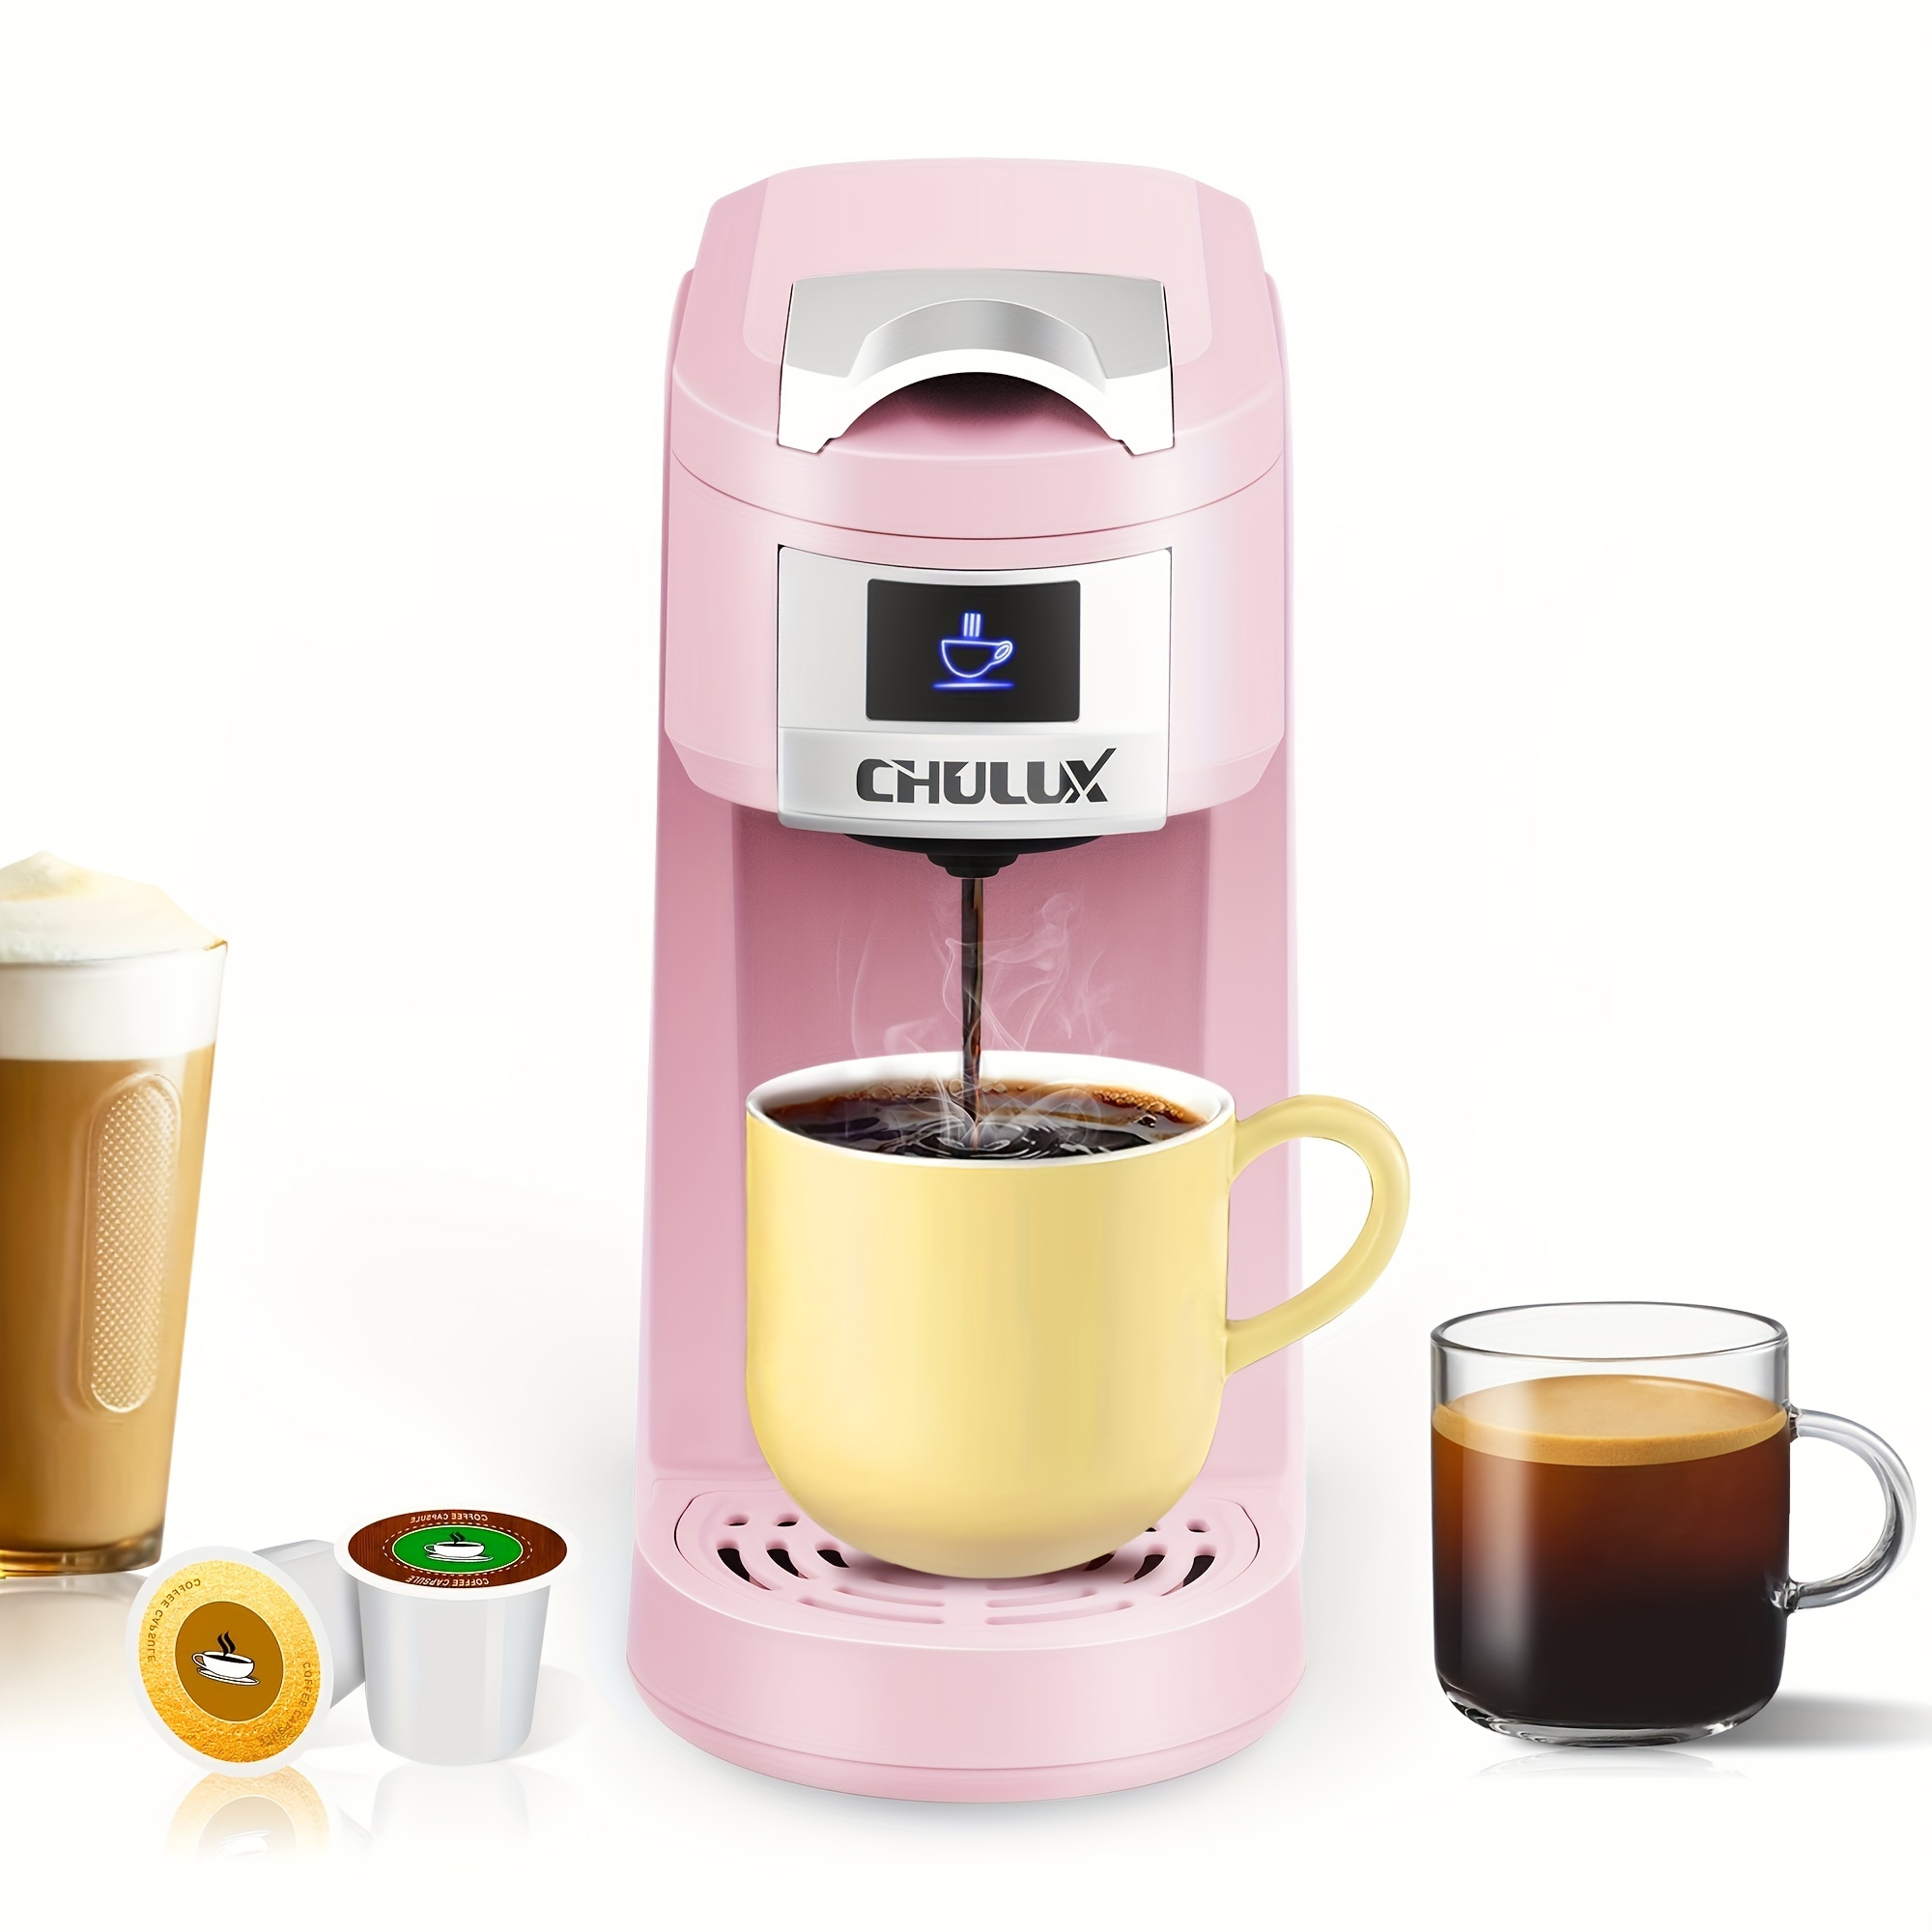 Sifene Single Serve Coffee Machine, 3 In 1 Pod Coffee Maker For K